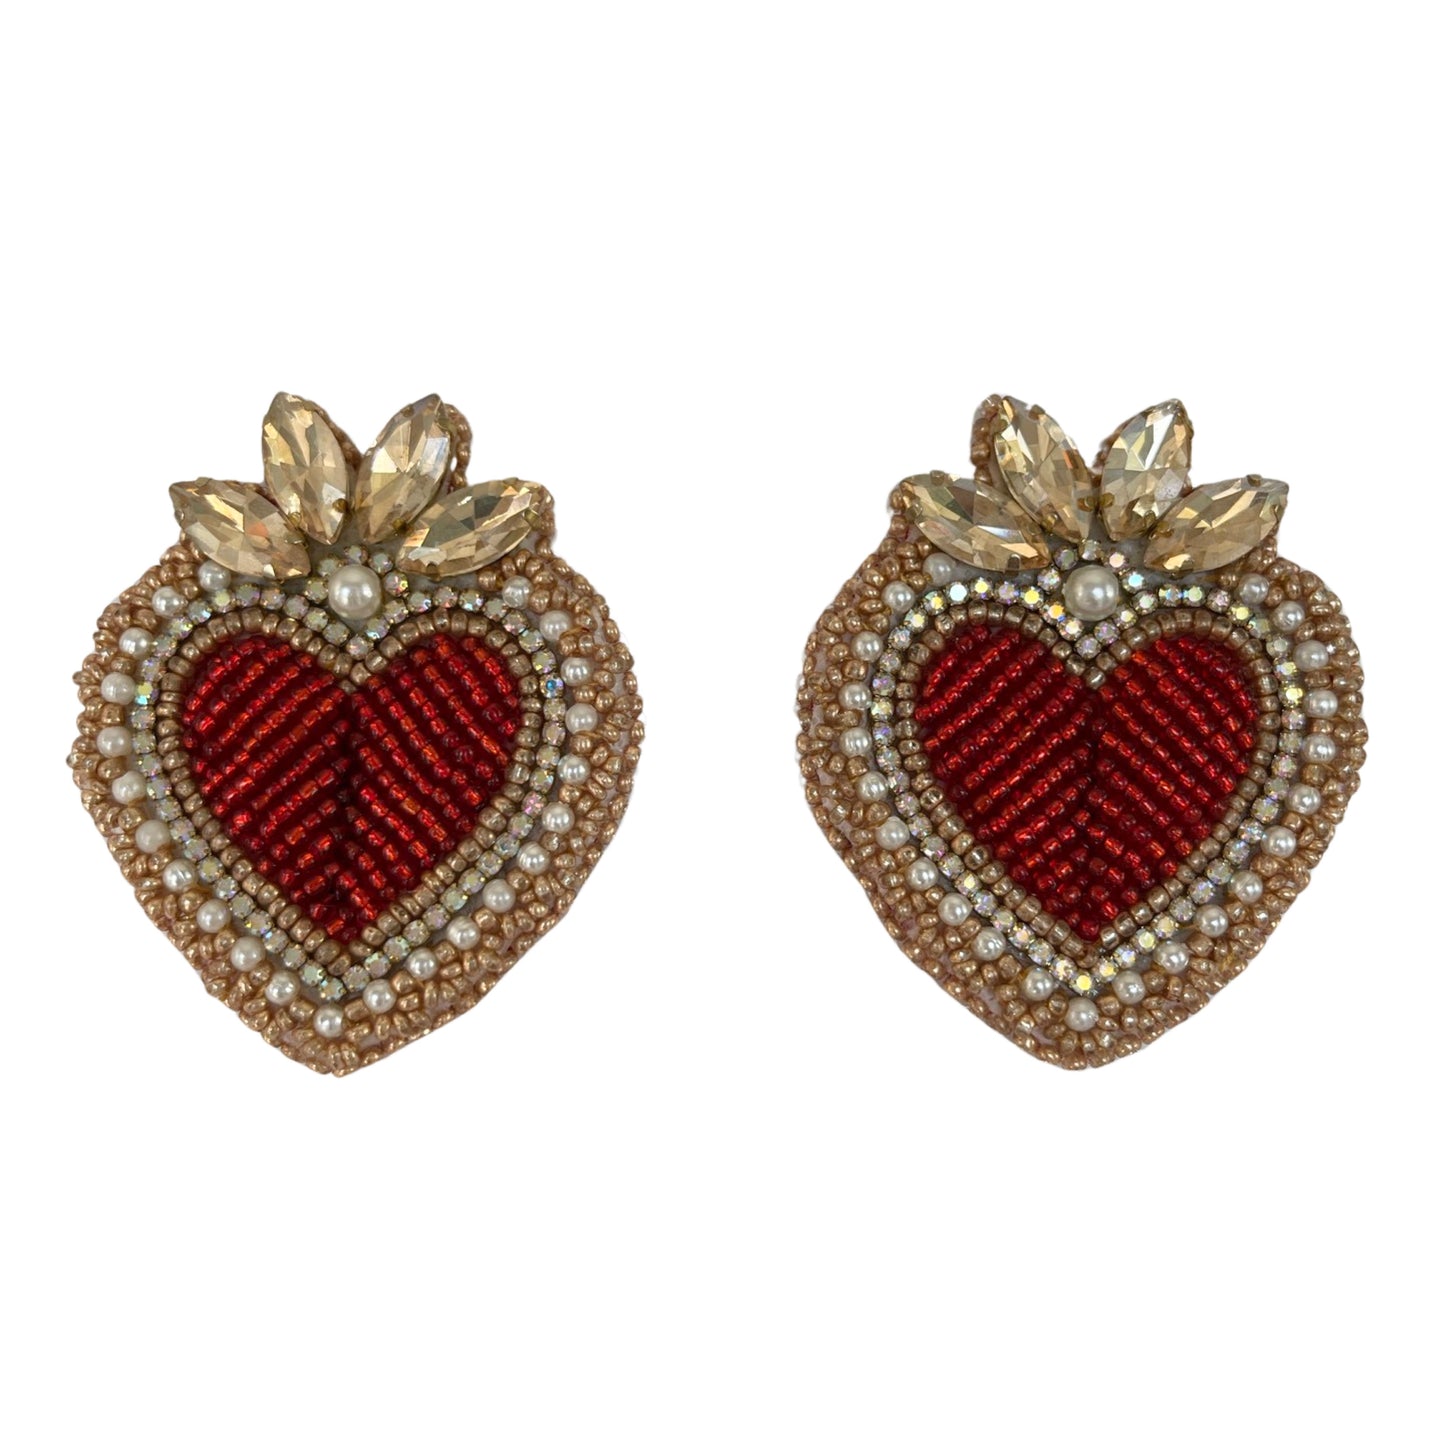 03. Elegant red heart earrings